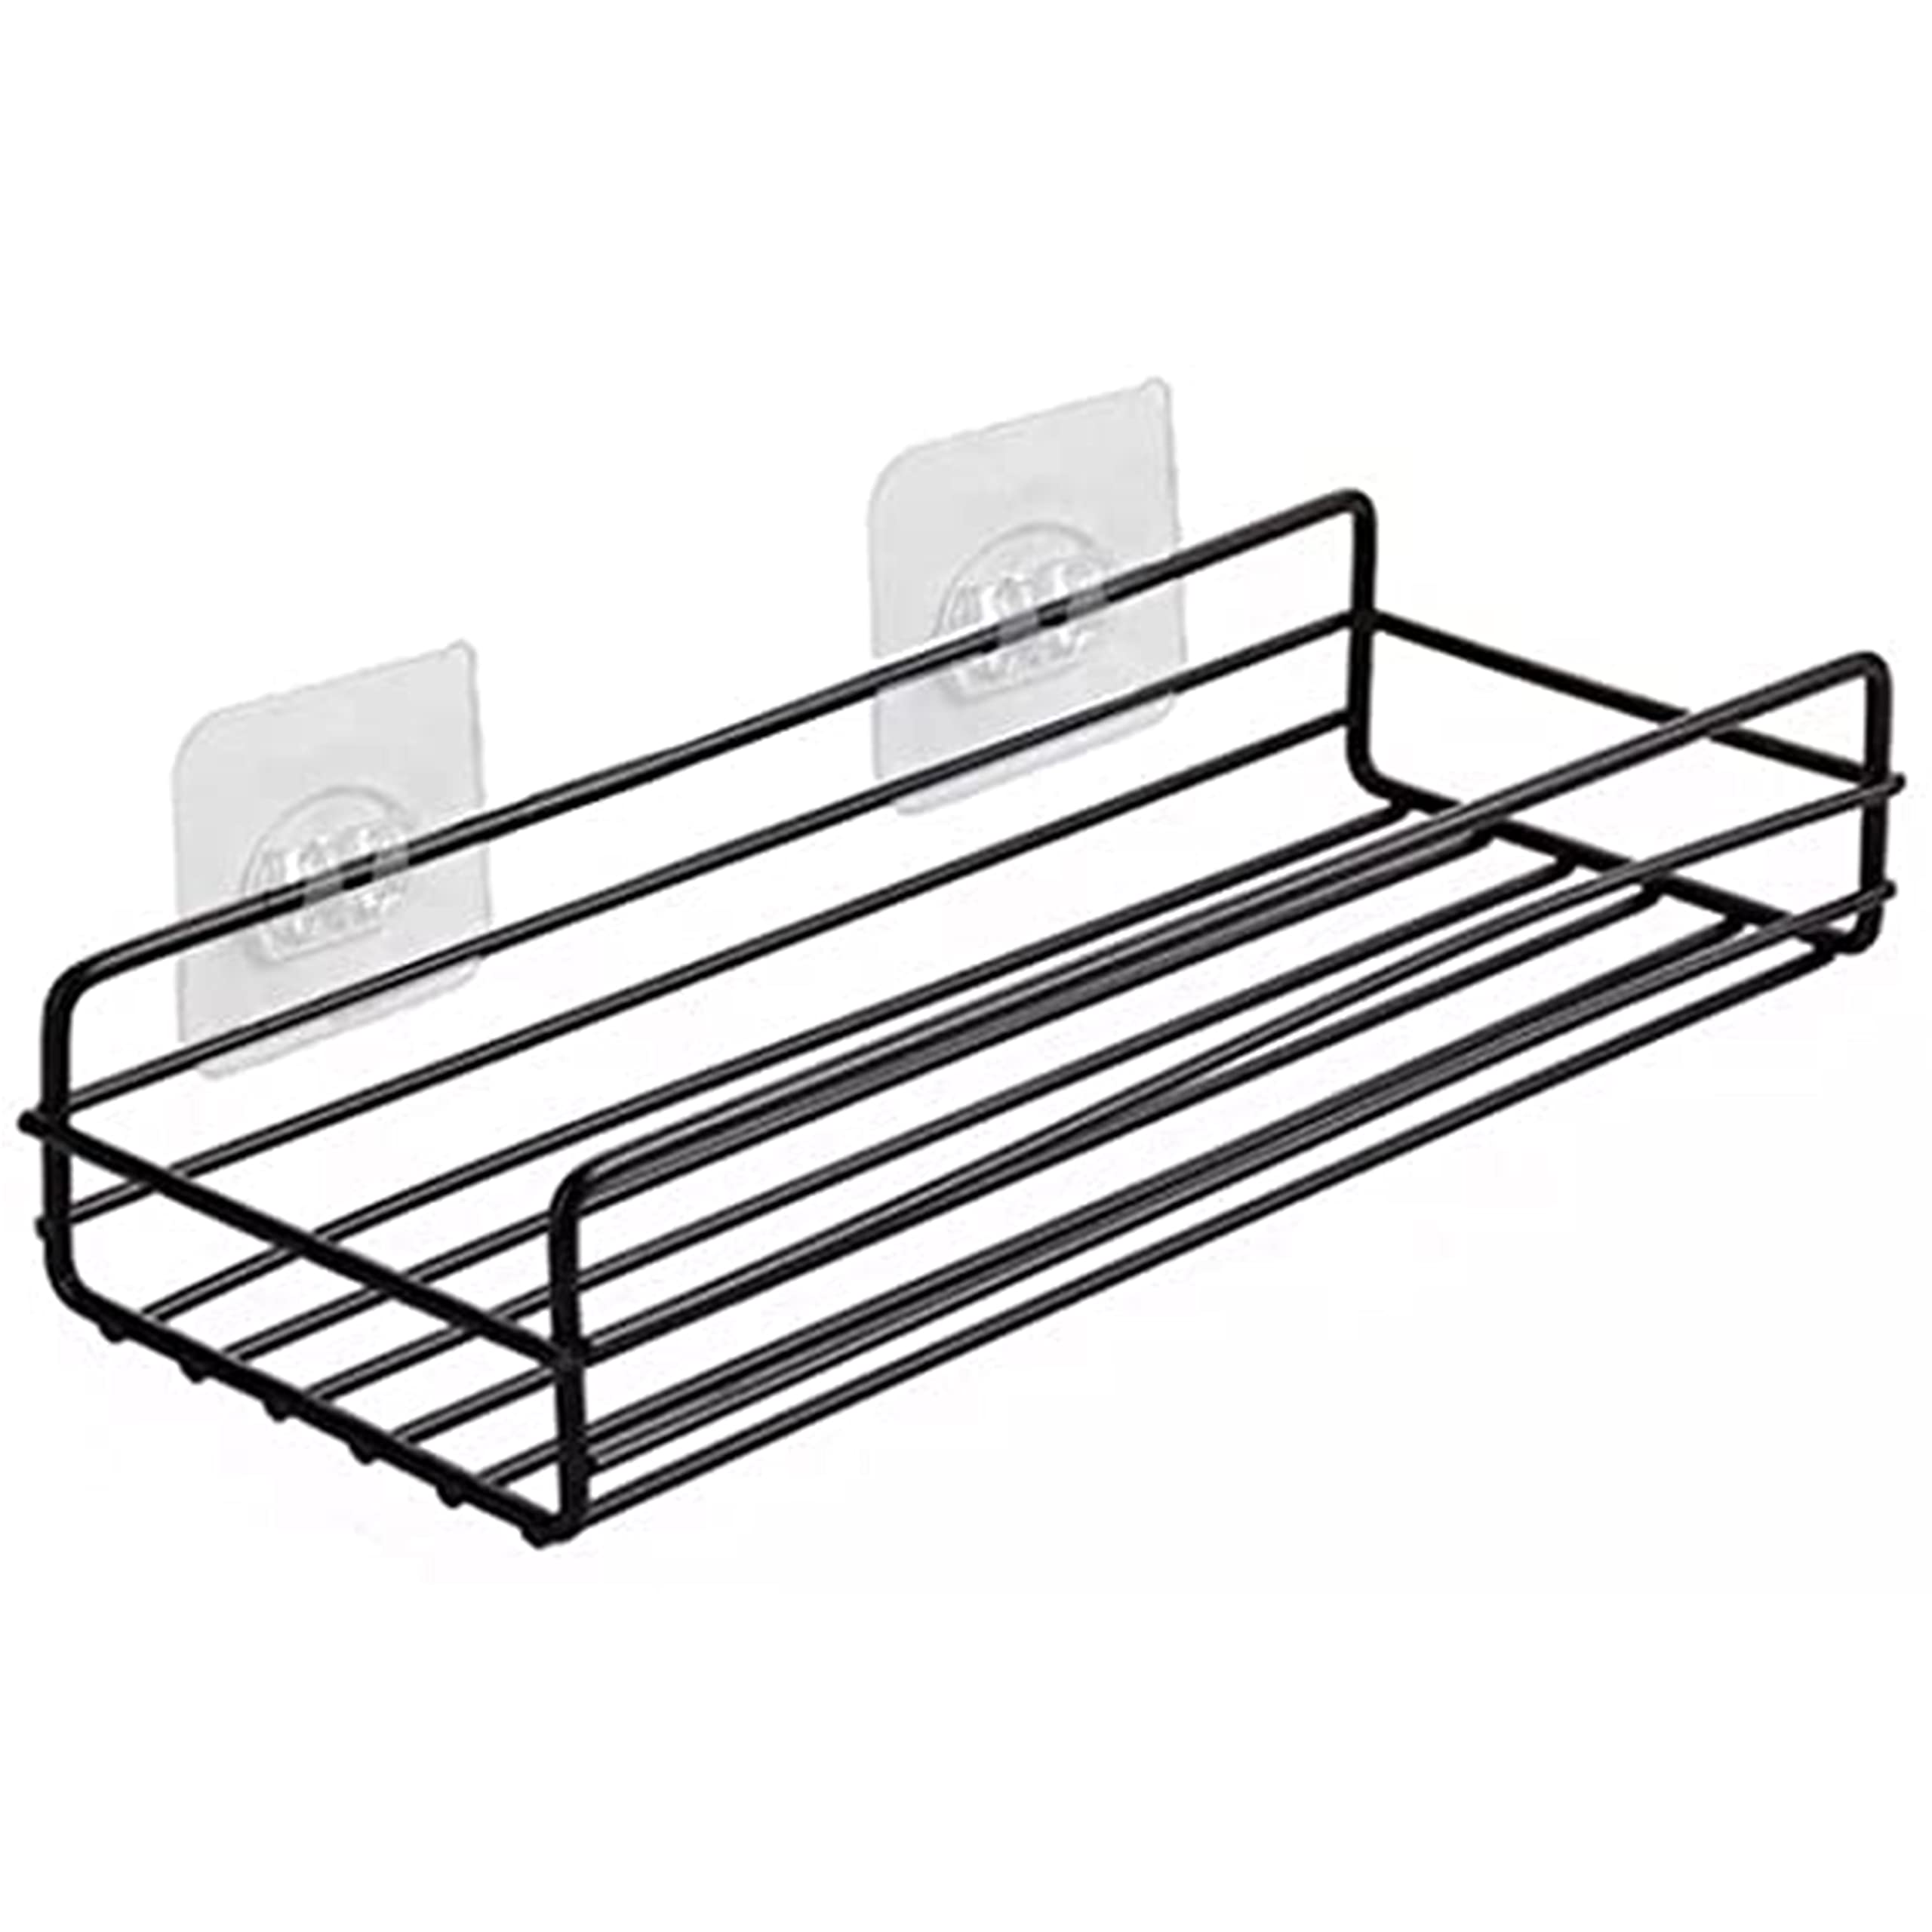 Plantex Self-Adhesive GI-Steel Bathroom Shelf-Multipurpose Rack/Organizer for Bathroom & Kitchen/Bathroom Accessories (12x5 inches,Black)